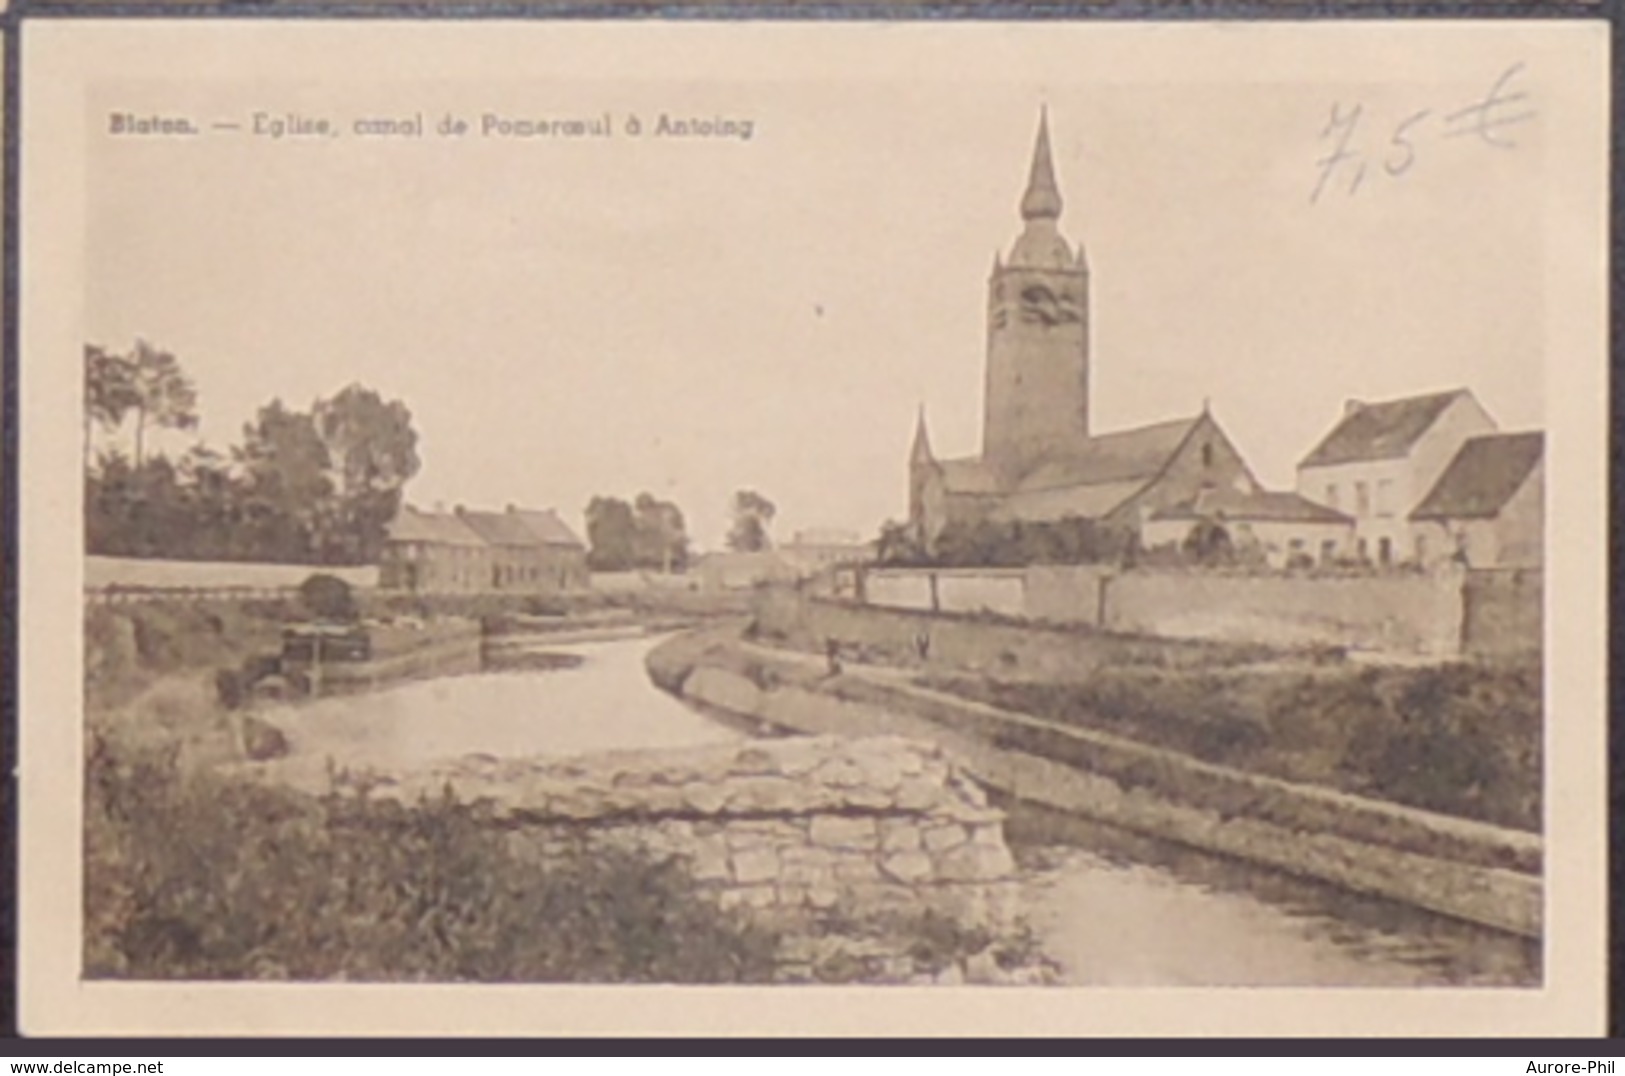 Blaton Eglise Canal De Pomeroeul à Antoing - Bernissart